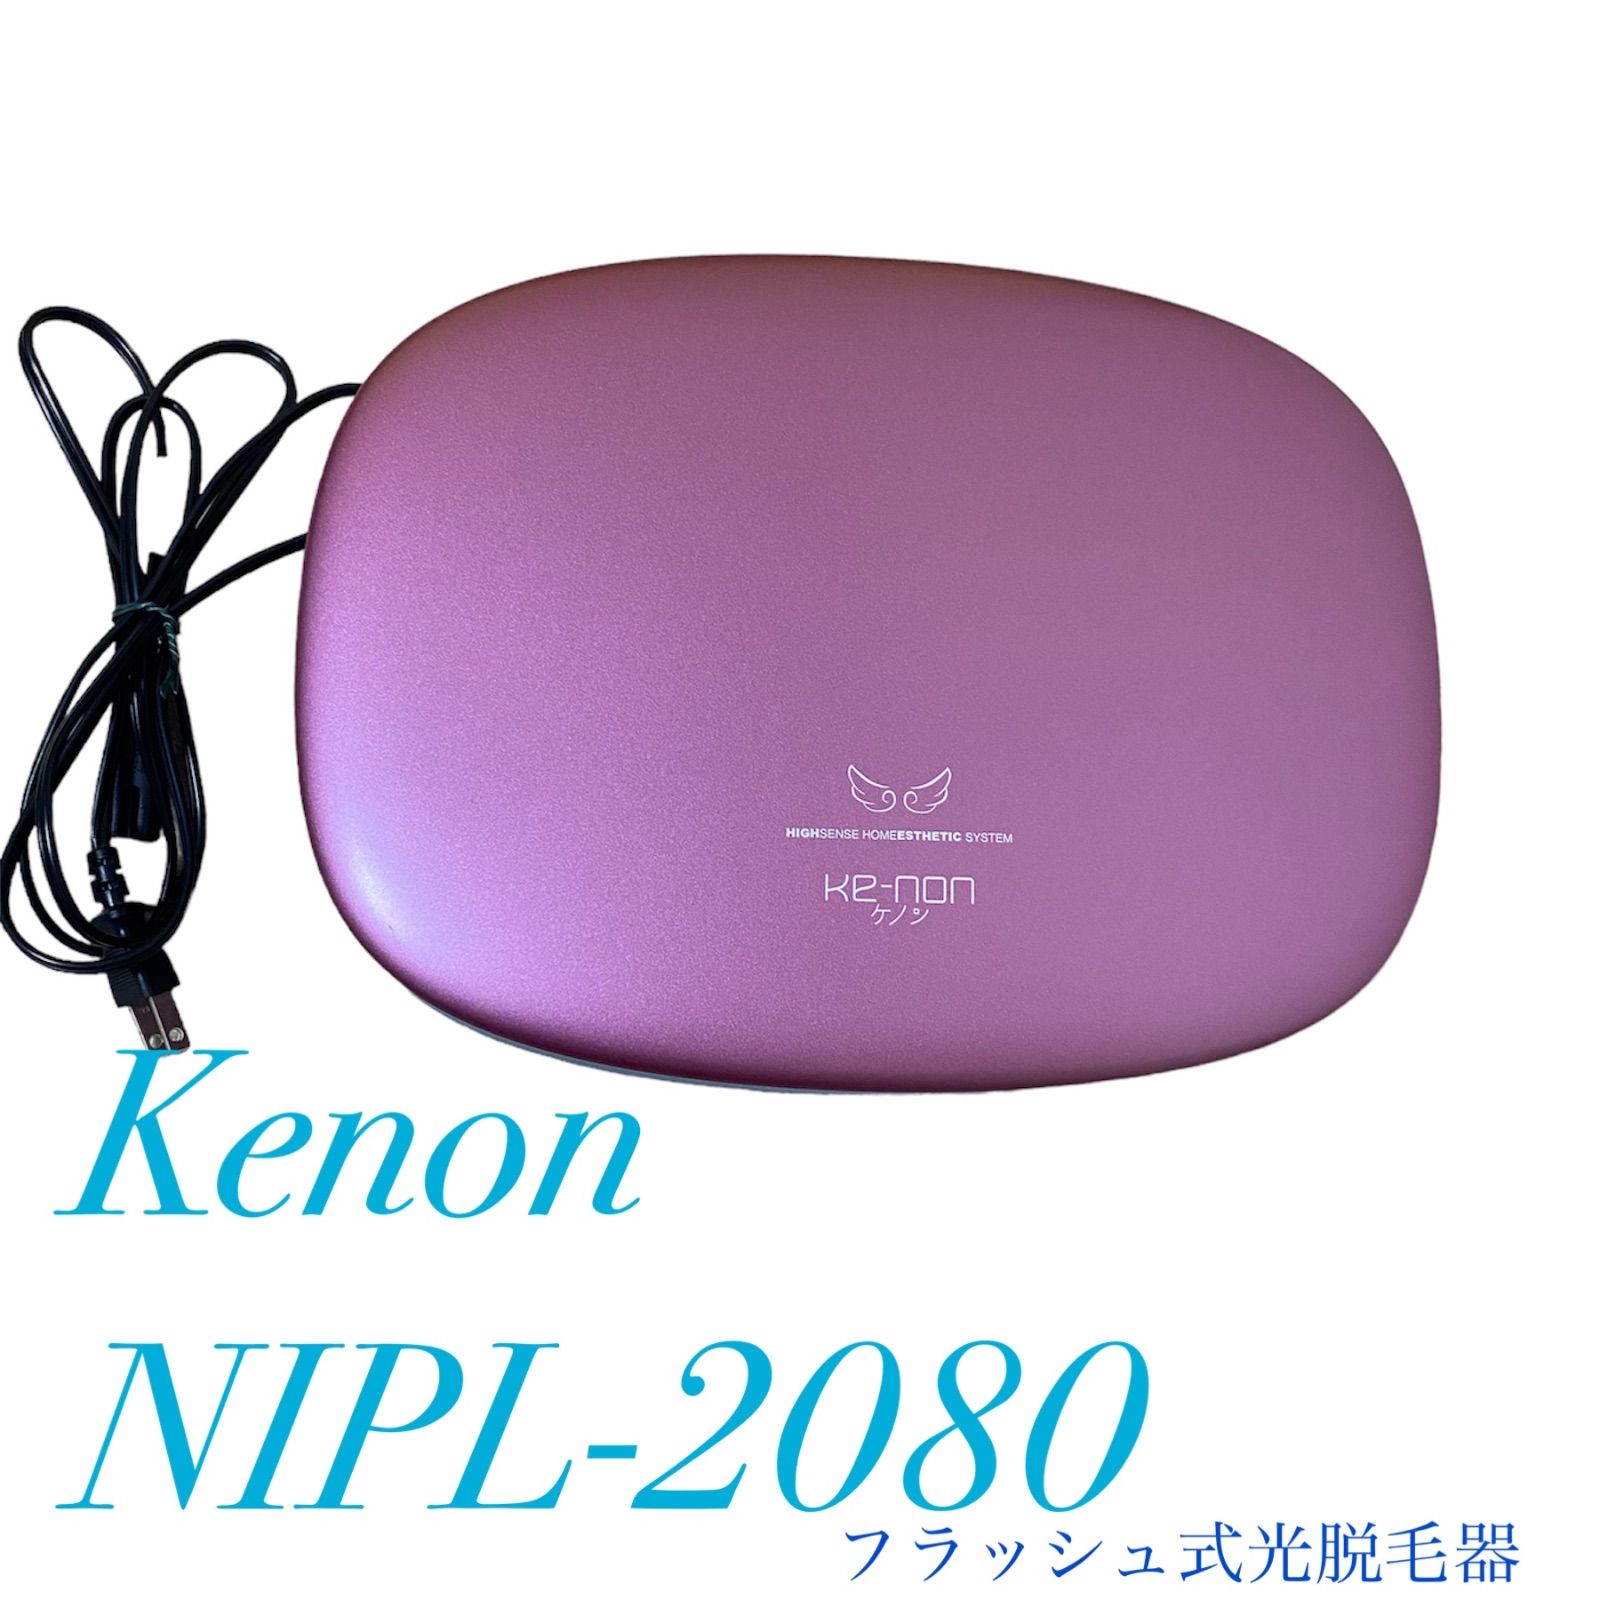 kenon ケノン 脱毛器 NIPL-2080 V4.1 エステ 光脱毛 - 脱毛・除毛